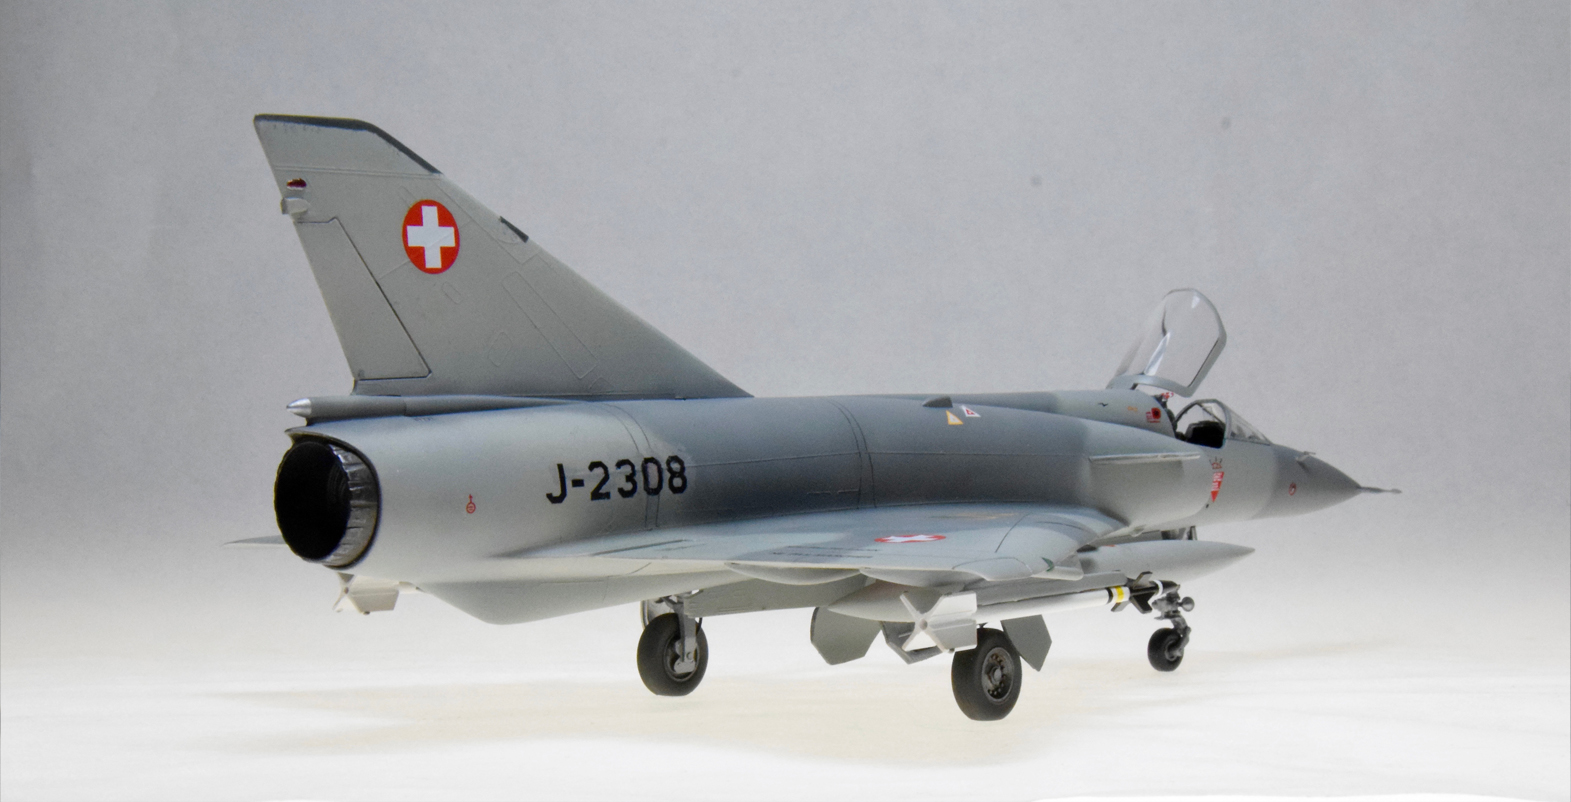 Mirage III S with C-70 mods, Swiss Air Force 1990 (ESCI 1/48)
